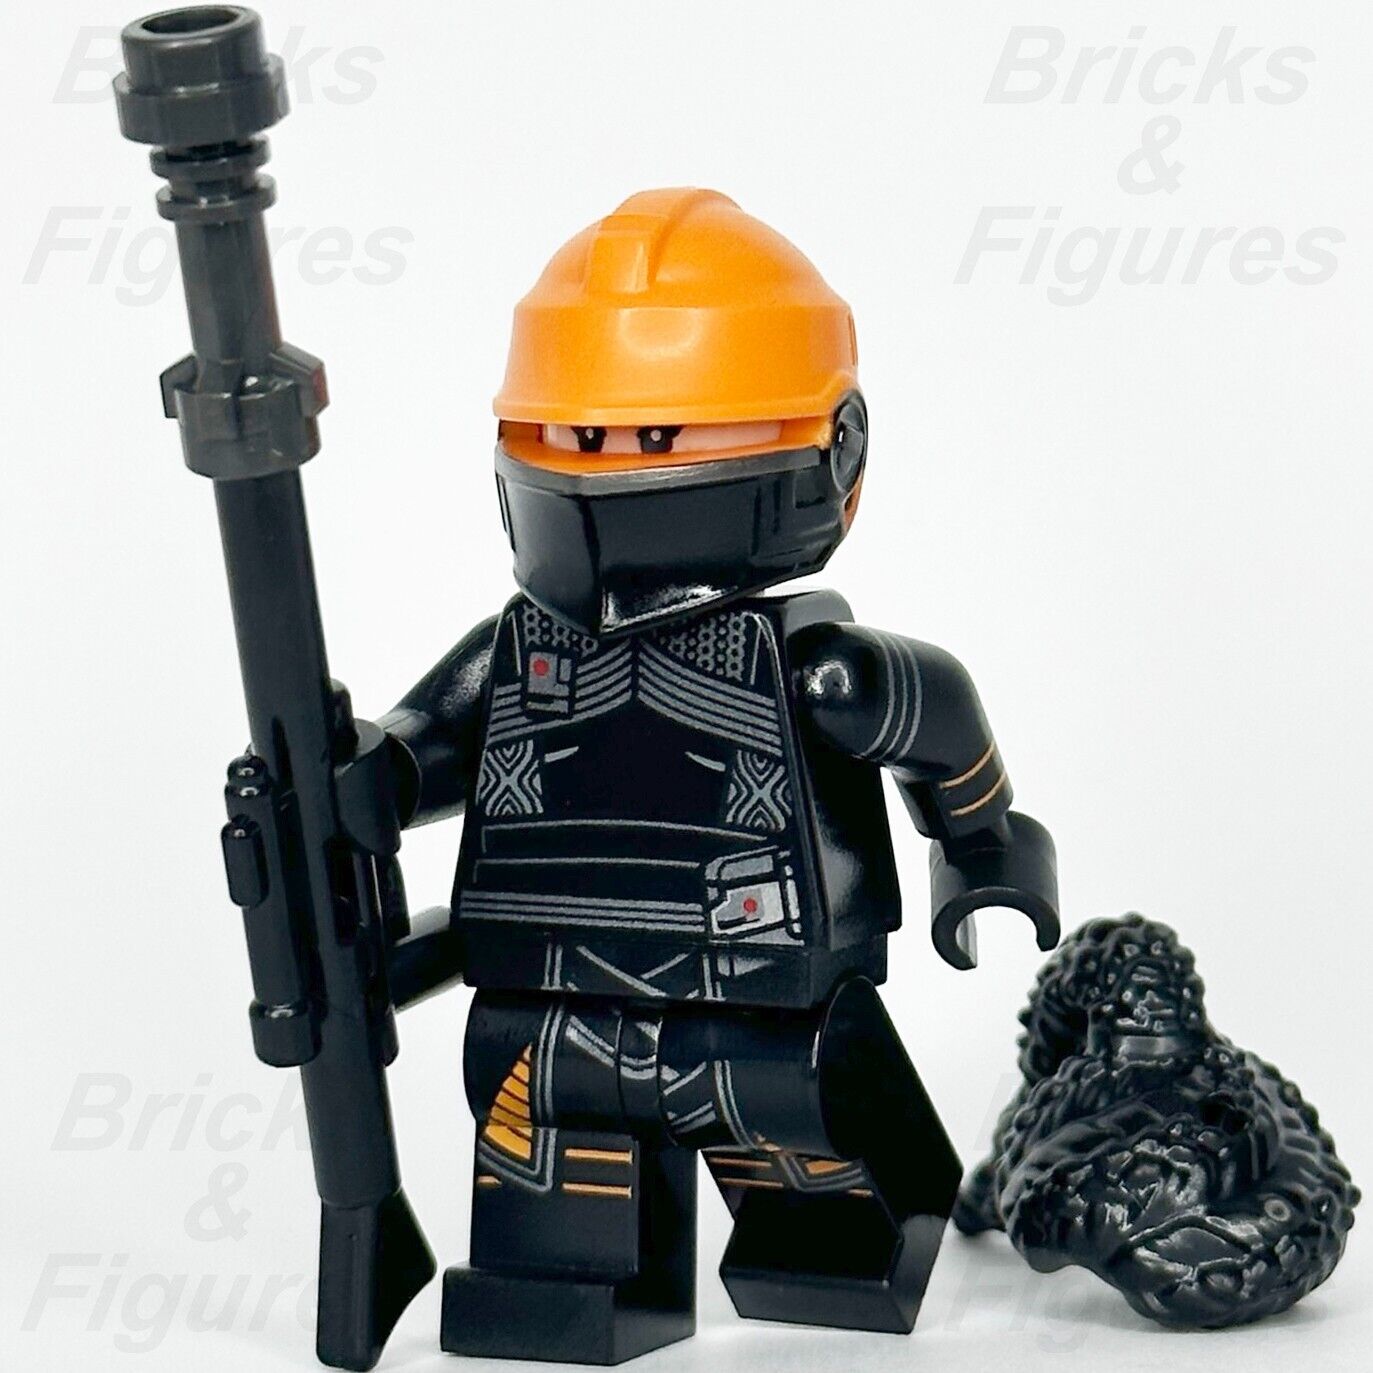 LEGO Star Wars Fennec Shand Minifigure Assassin The Mandalorian 75315 sw1159 1